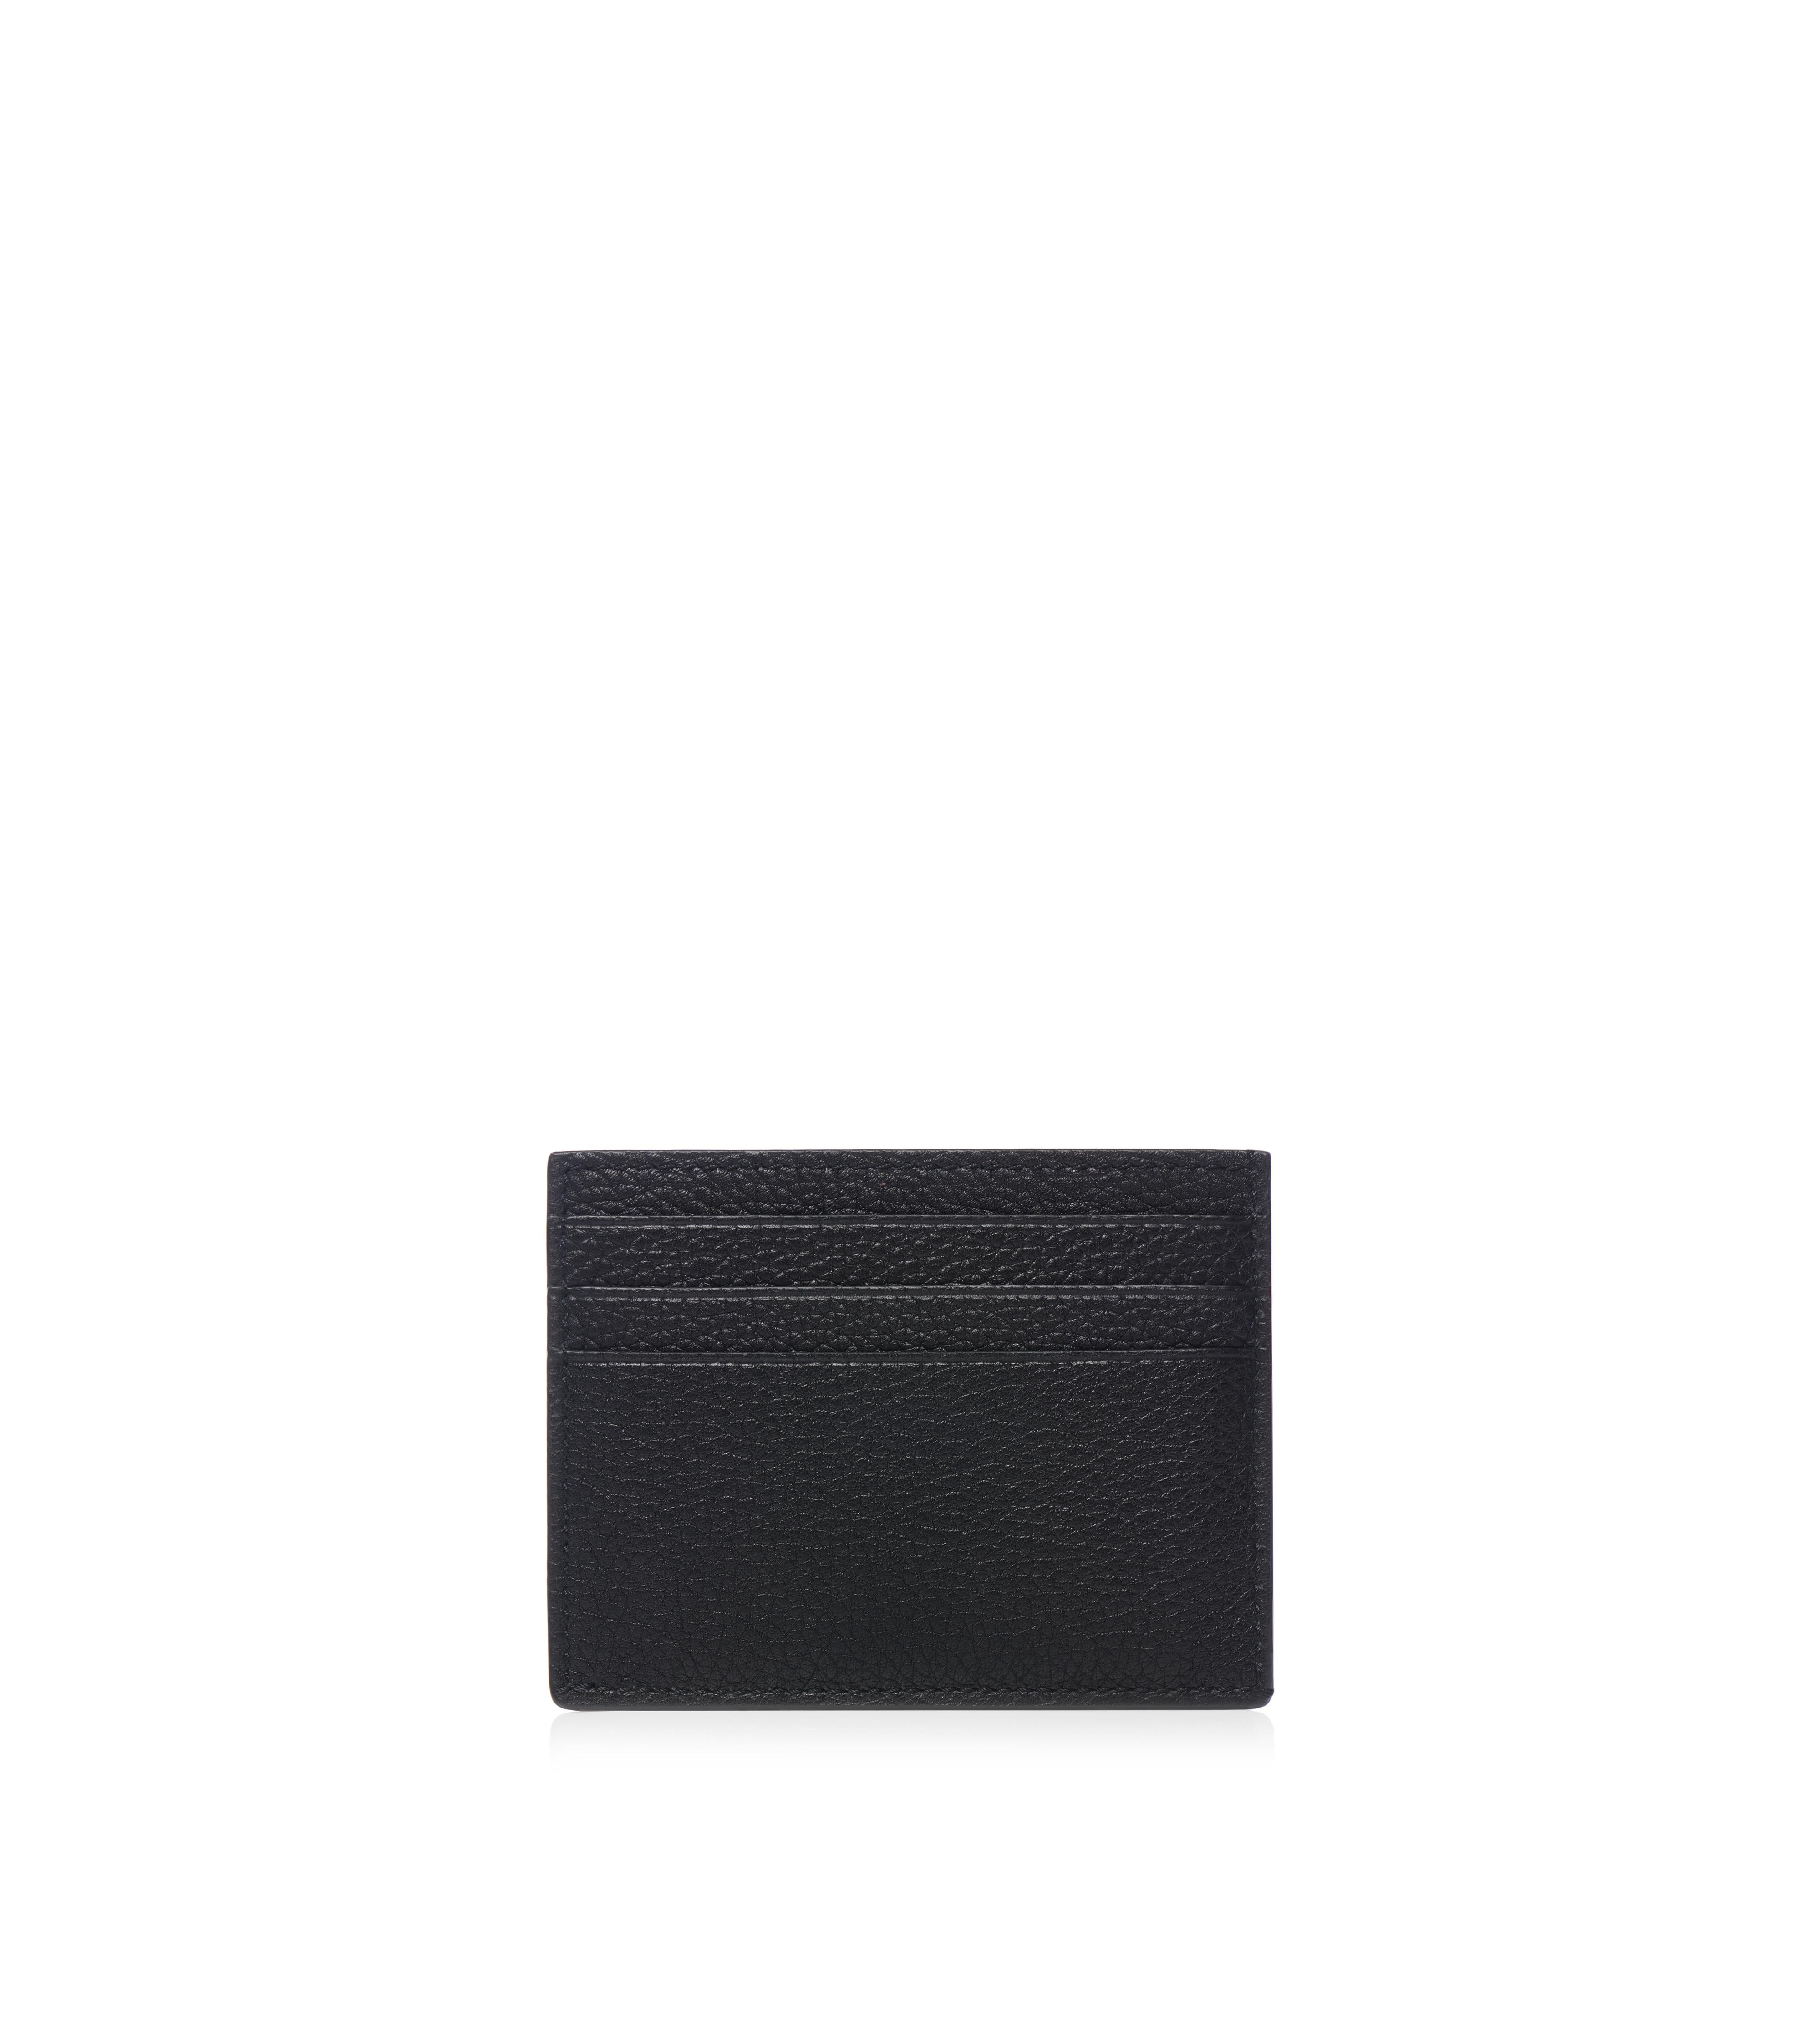 Saint Laurent For You Pocket Mirror w/Case Leather Card Holder